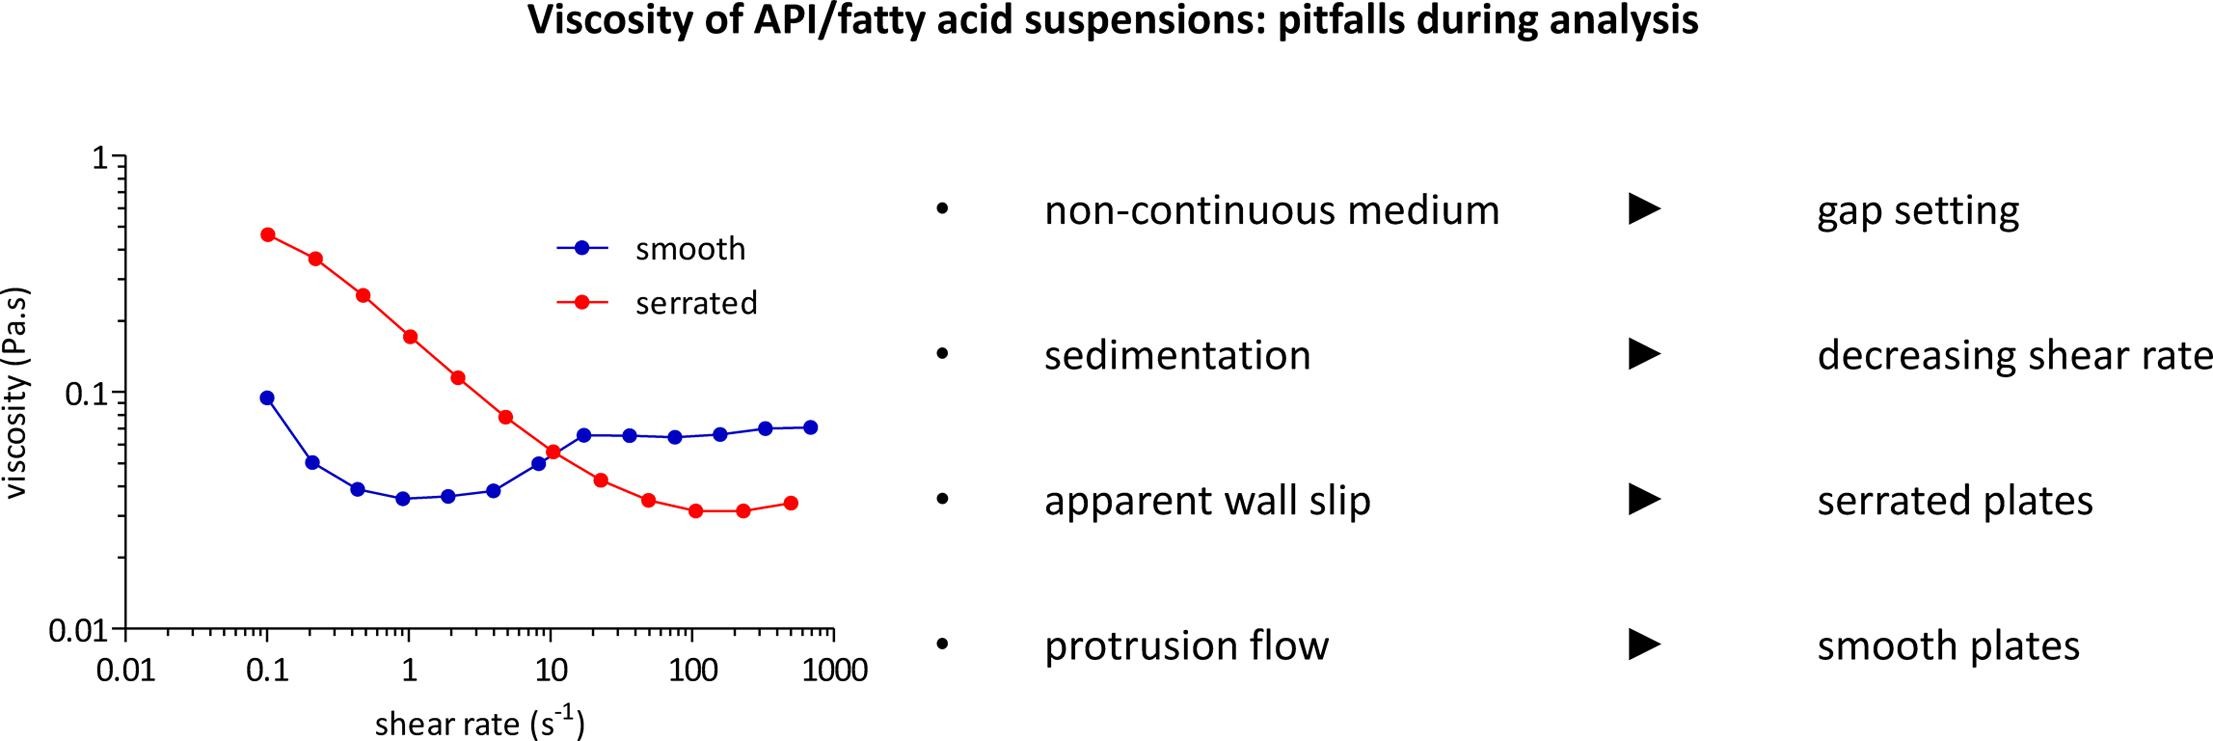 Viscosity of API:fatty acid suspensions